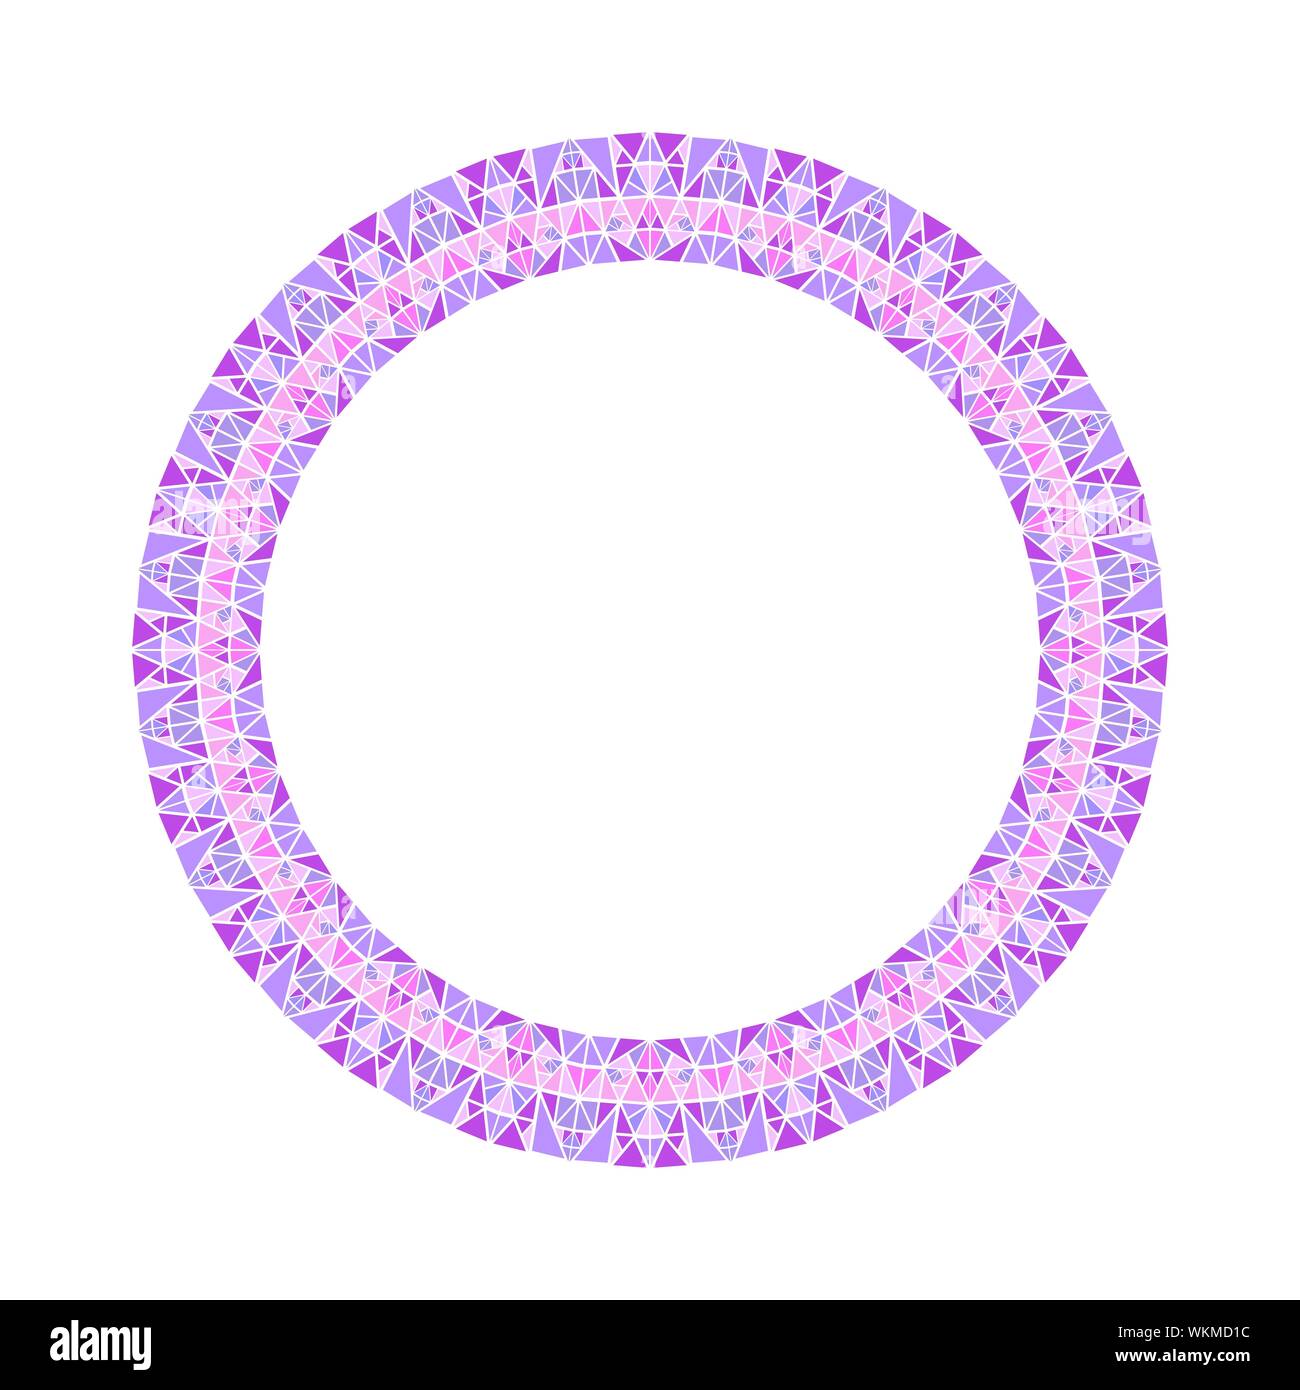 Mosaic circle Stock Vector Images - Alamy